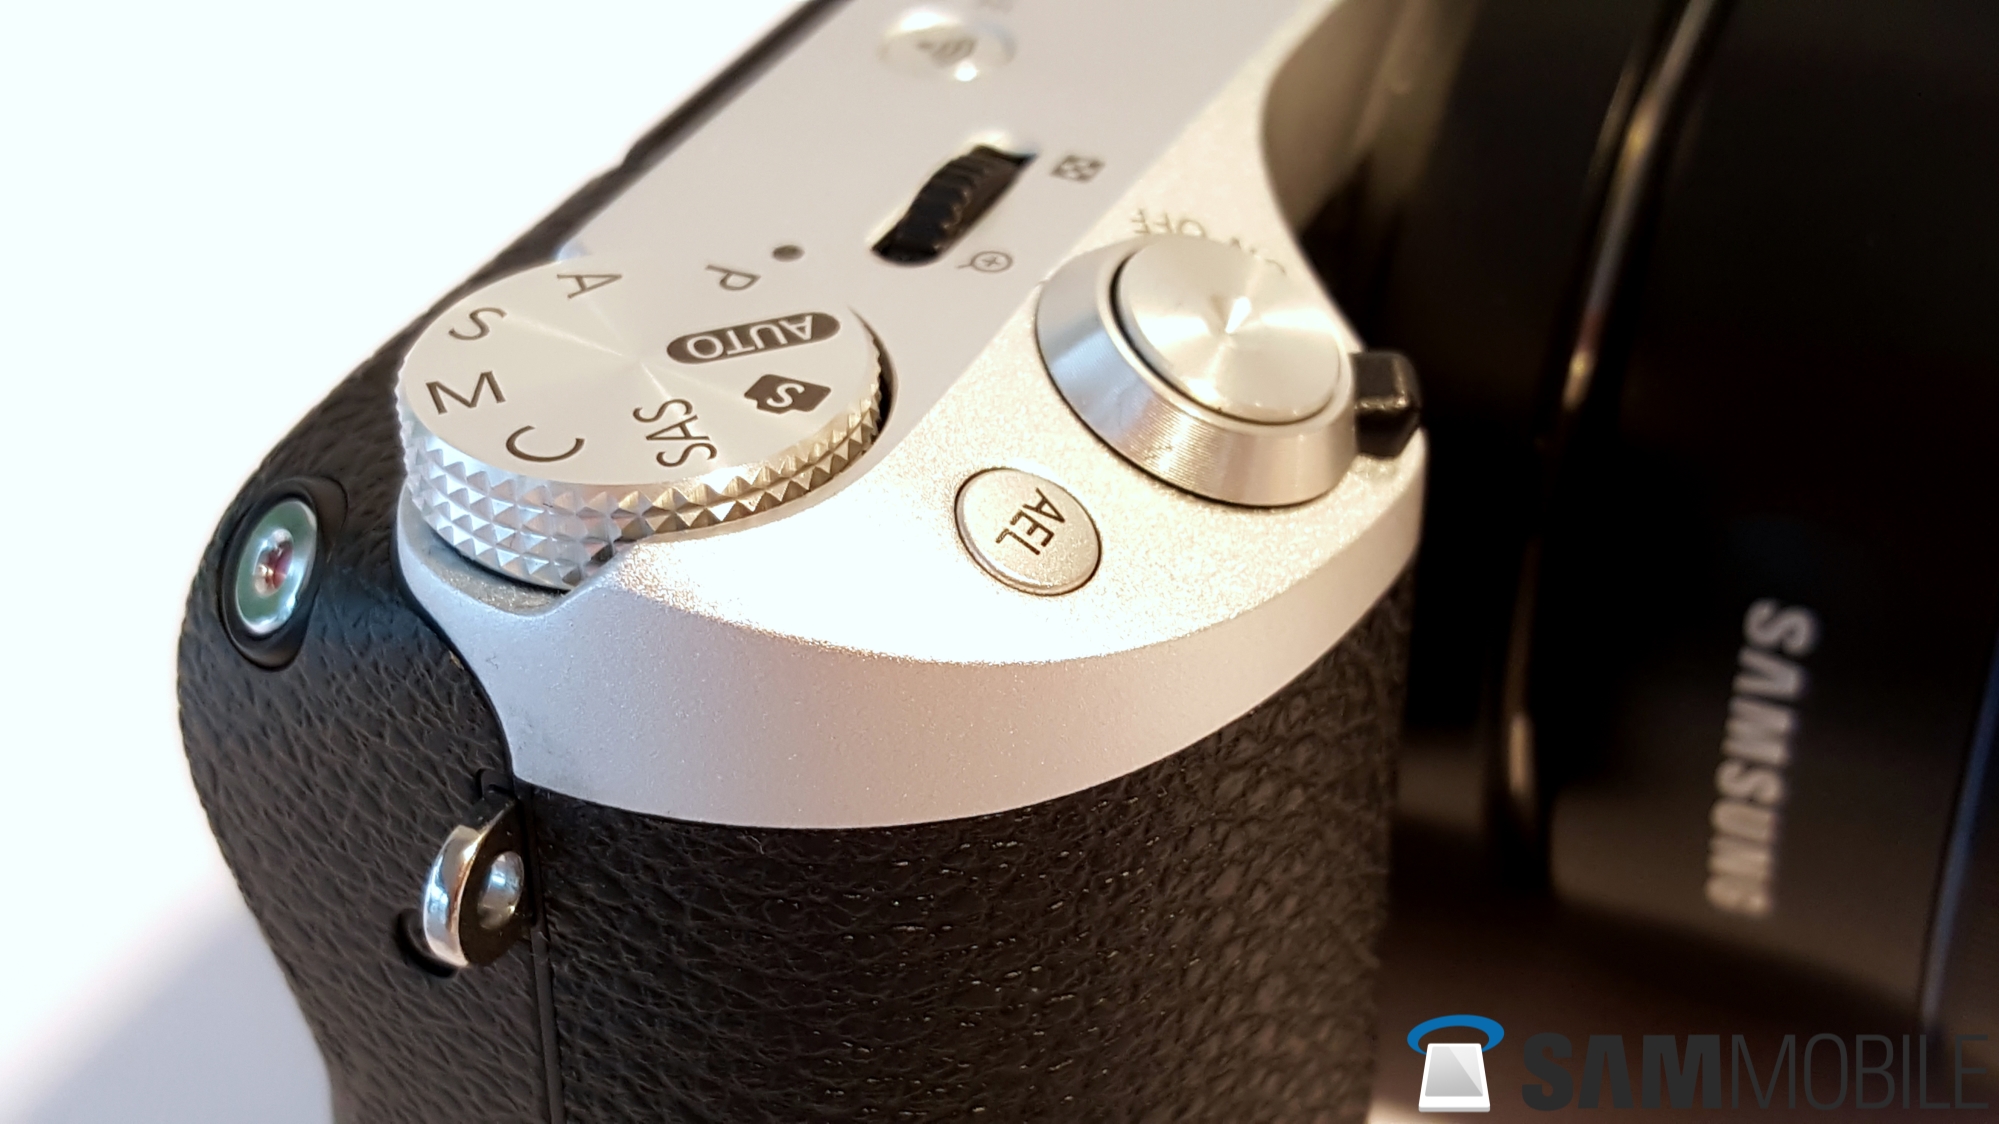 kalf Mededogen ontwikkelen Samsung NX500 review: the best affordable system camera - SamMobile -  SamMobile